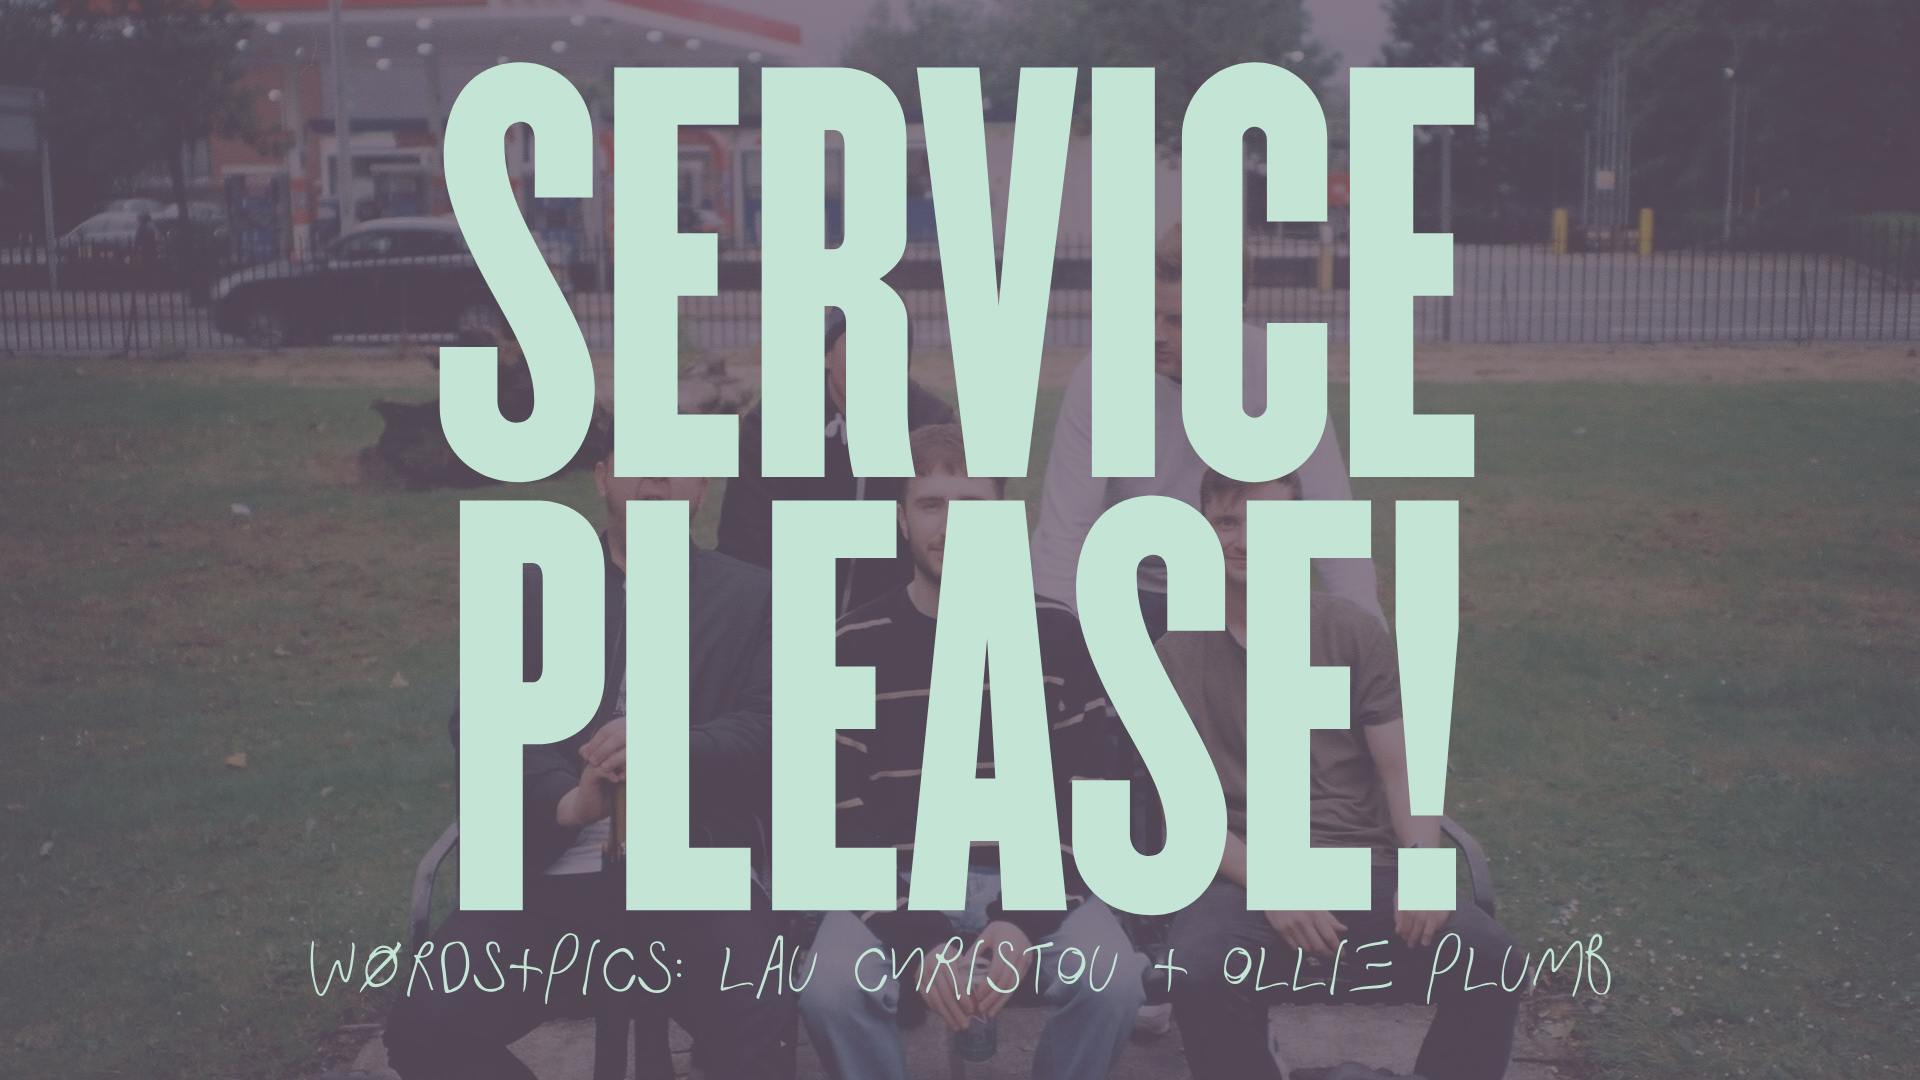 SERVICE PLEASE!